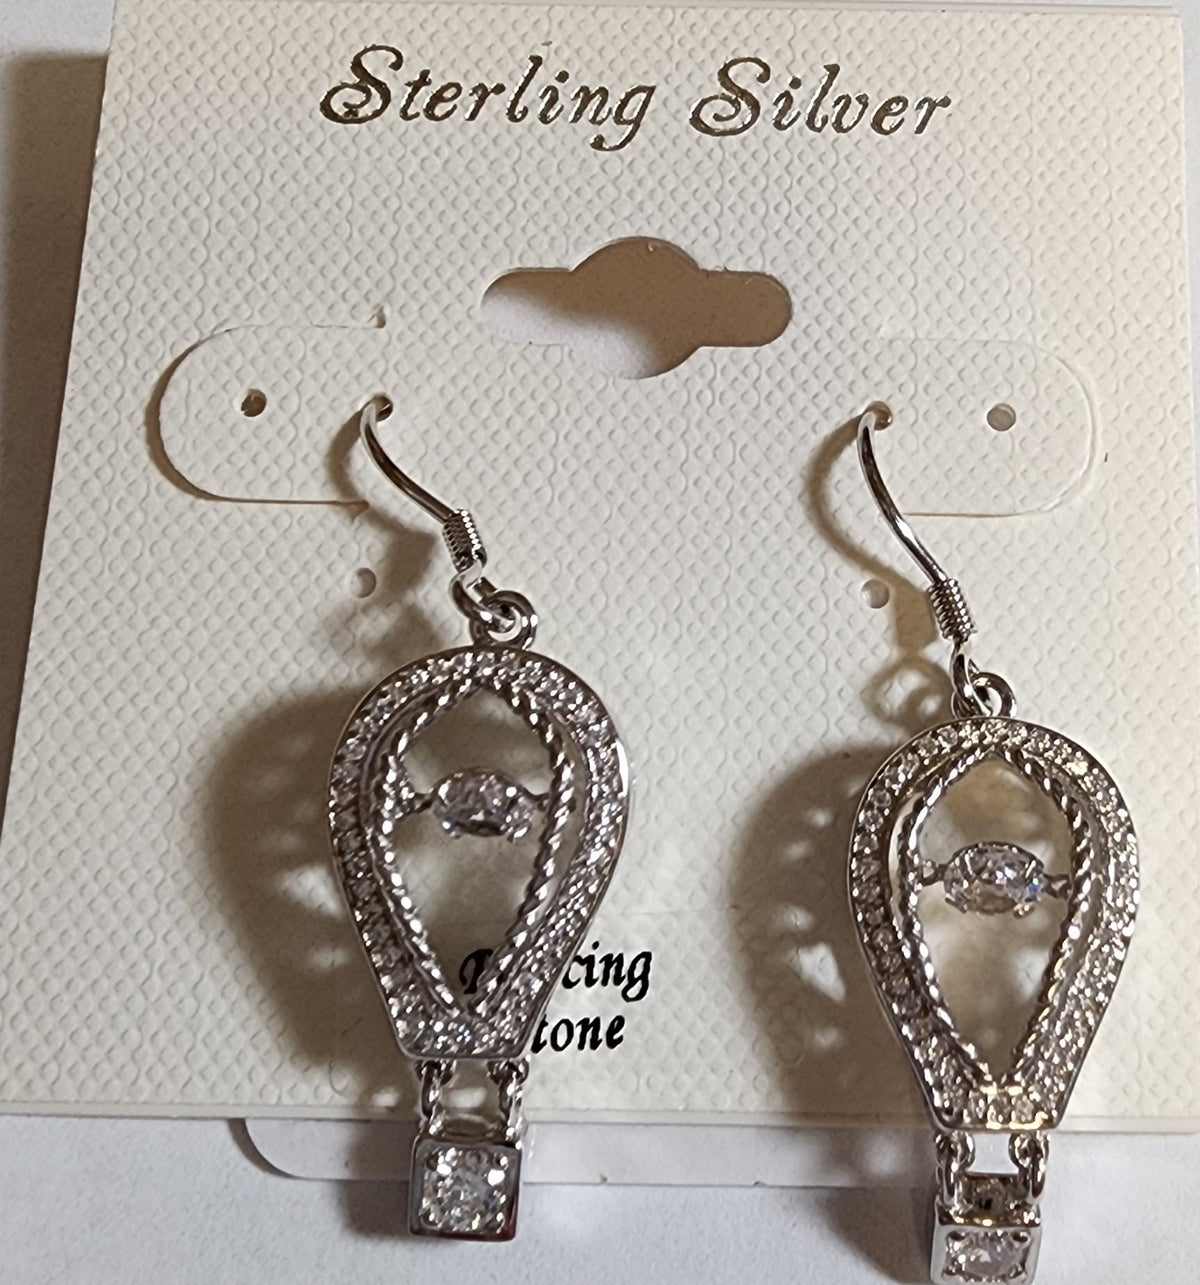 Sterling Silver Dancing Stone Earrings